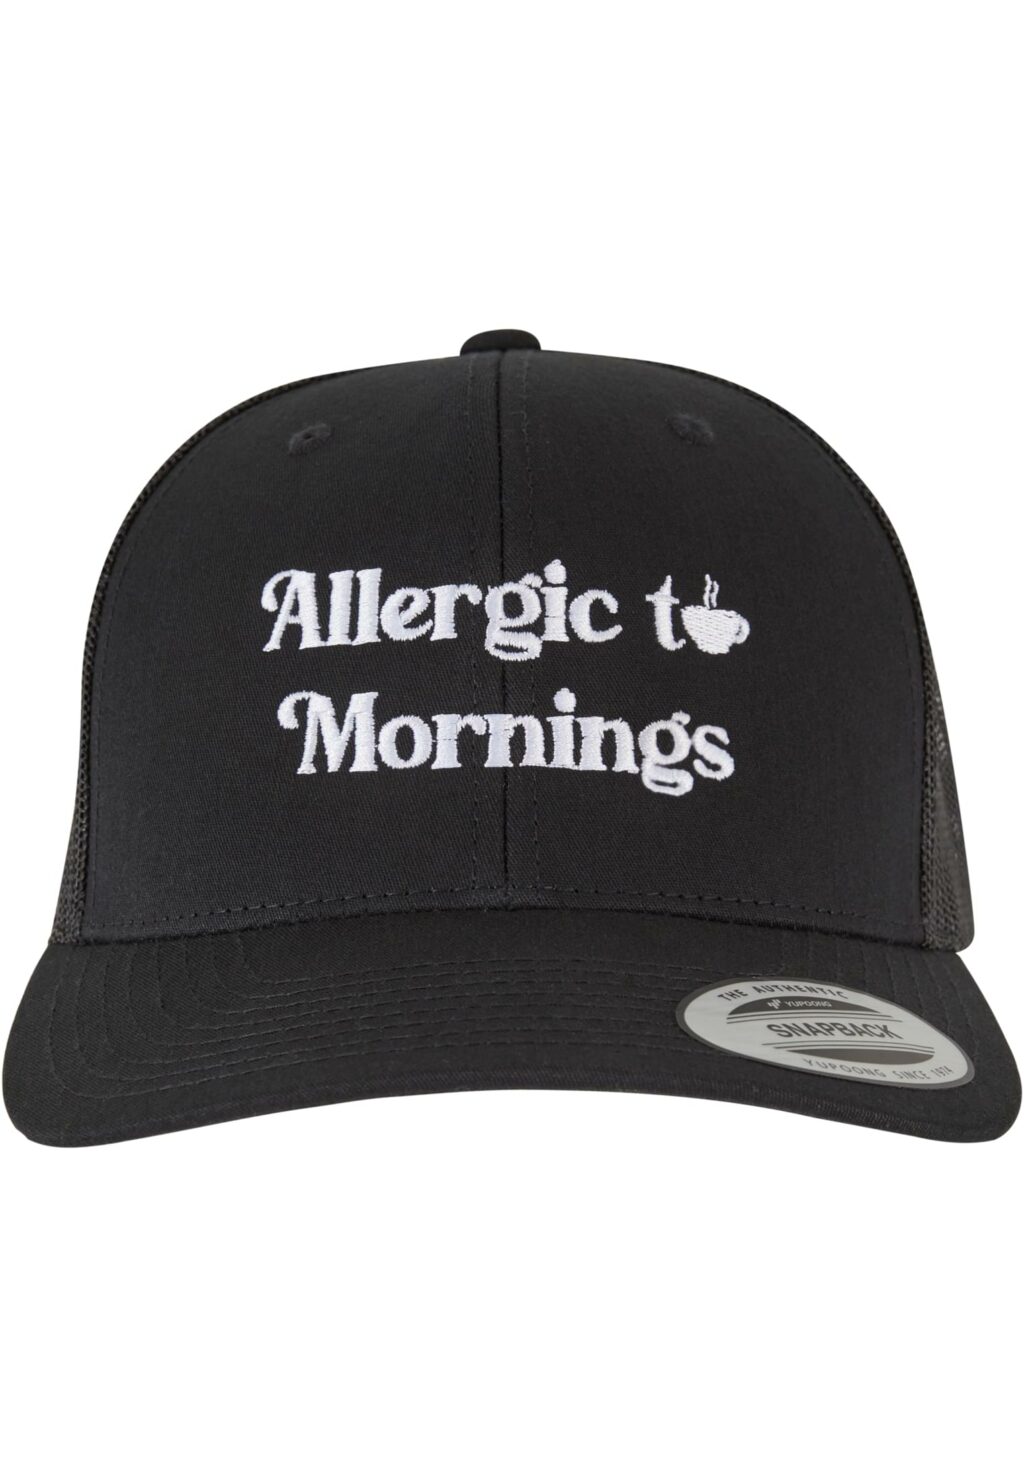 Allergic To Mornings Retro Trucker black one MT2836